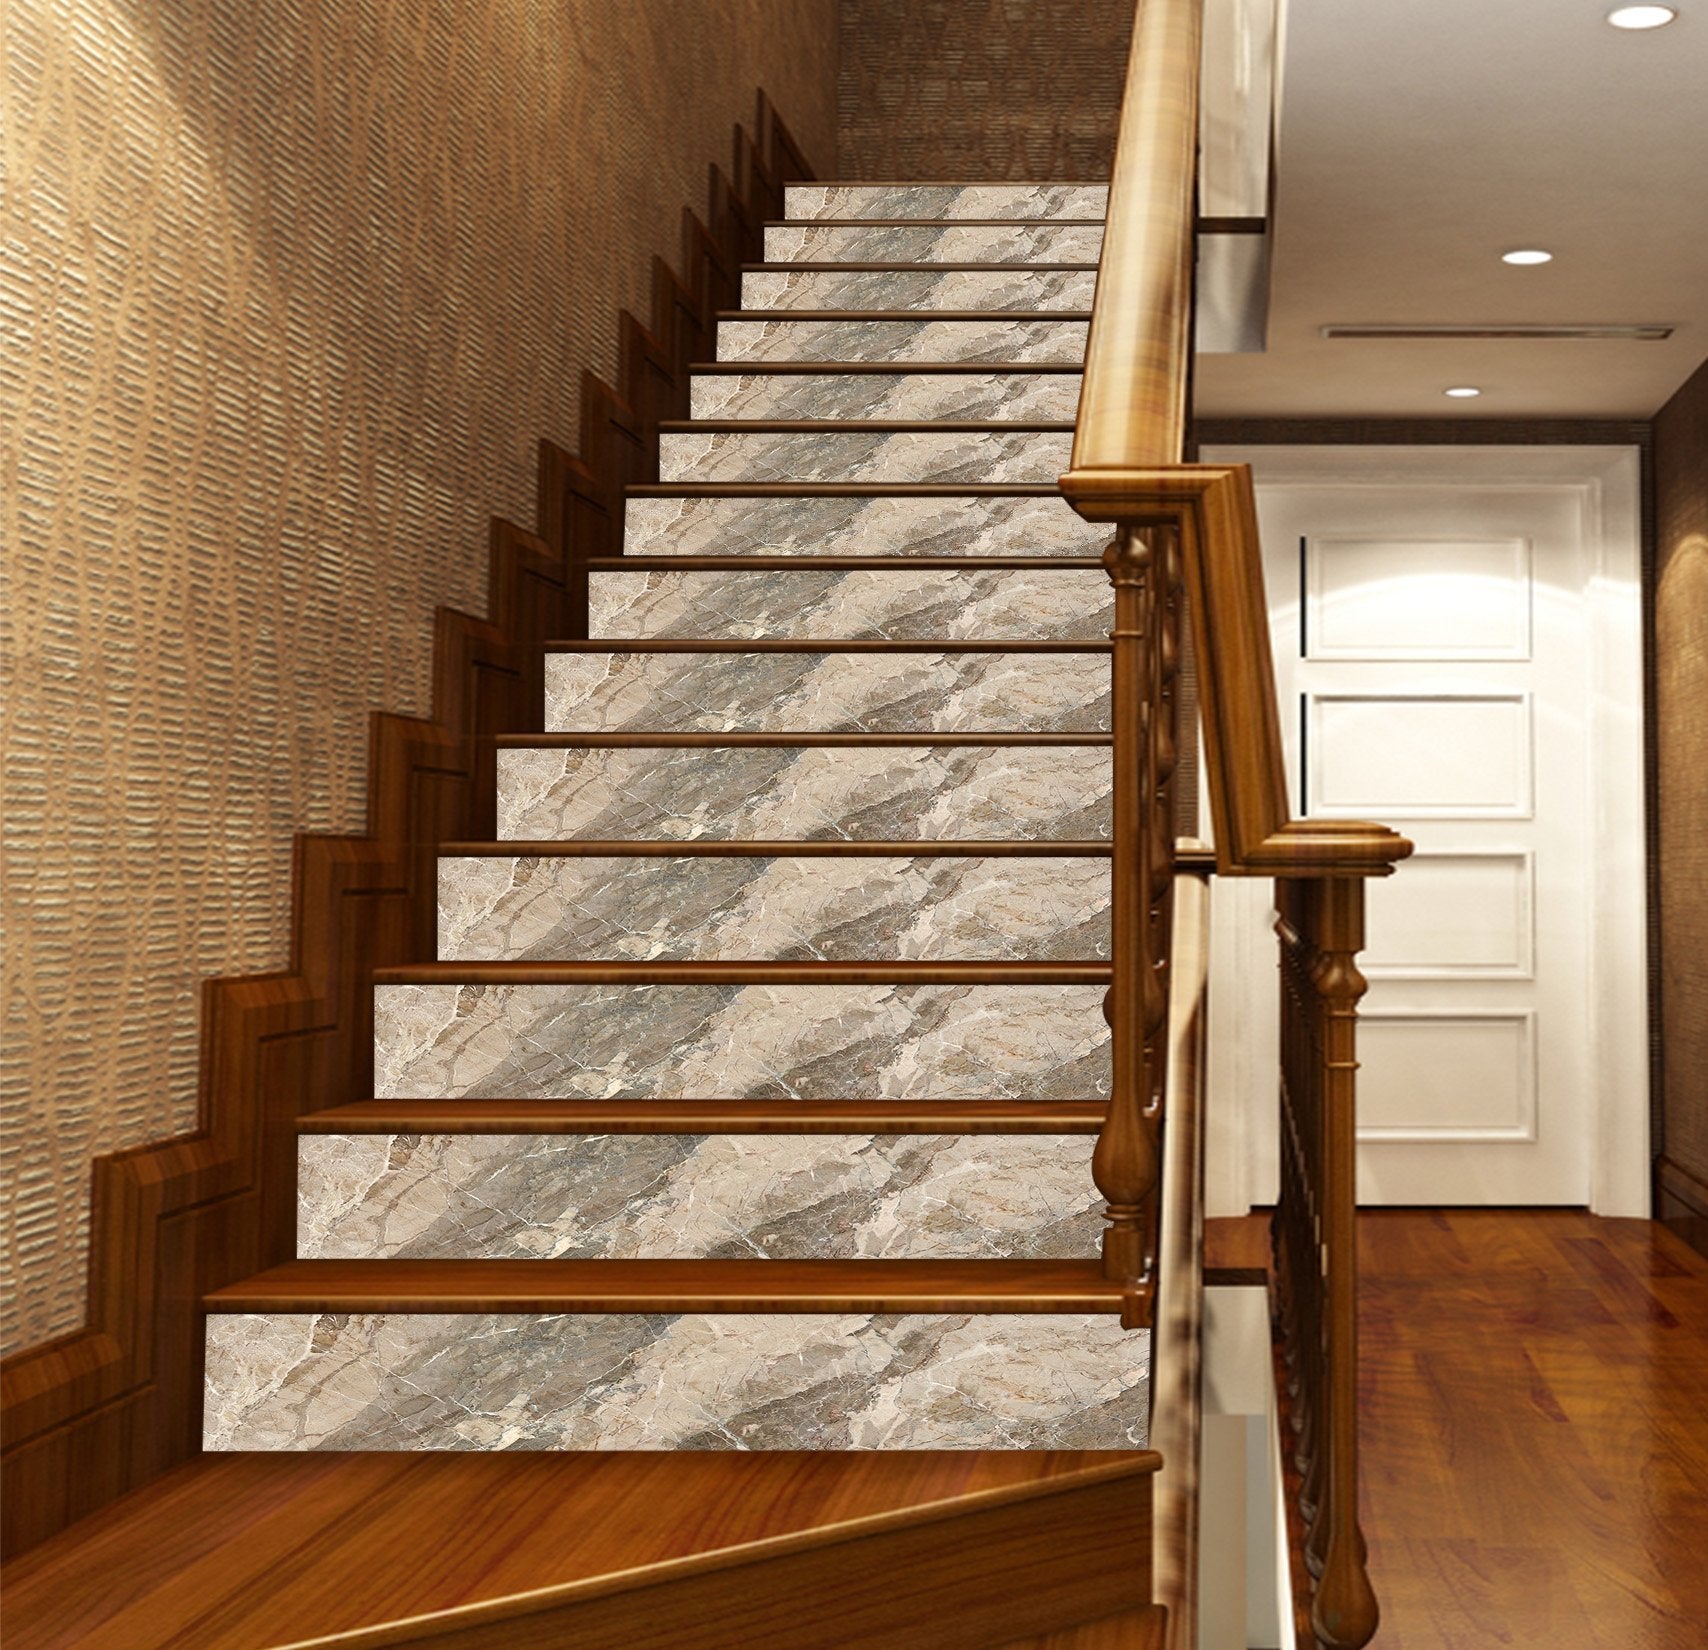 3D Natural Rock 6532 Marble Tile Texture Stair Risers Wallpaper AJ Wallpaper 